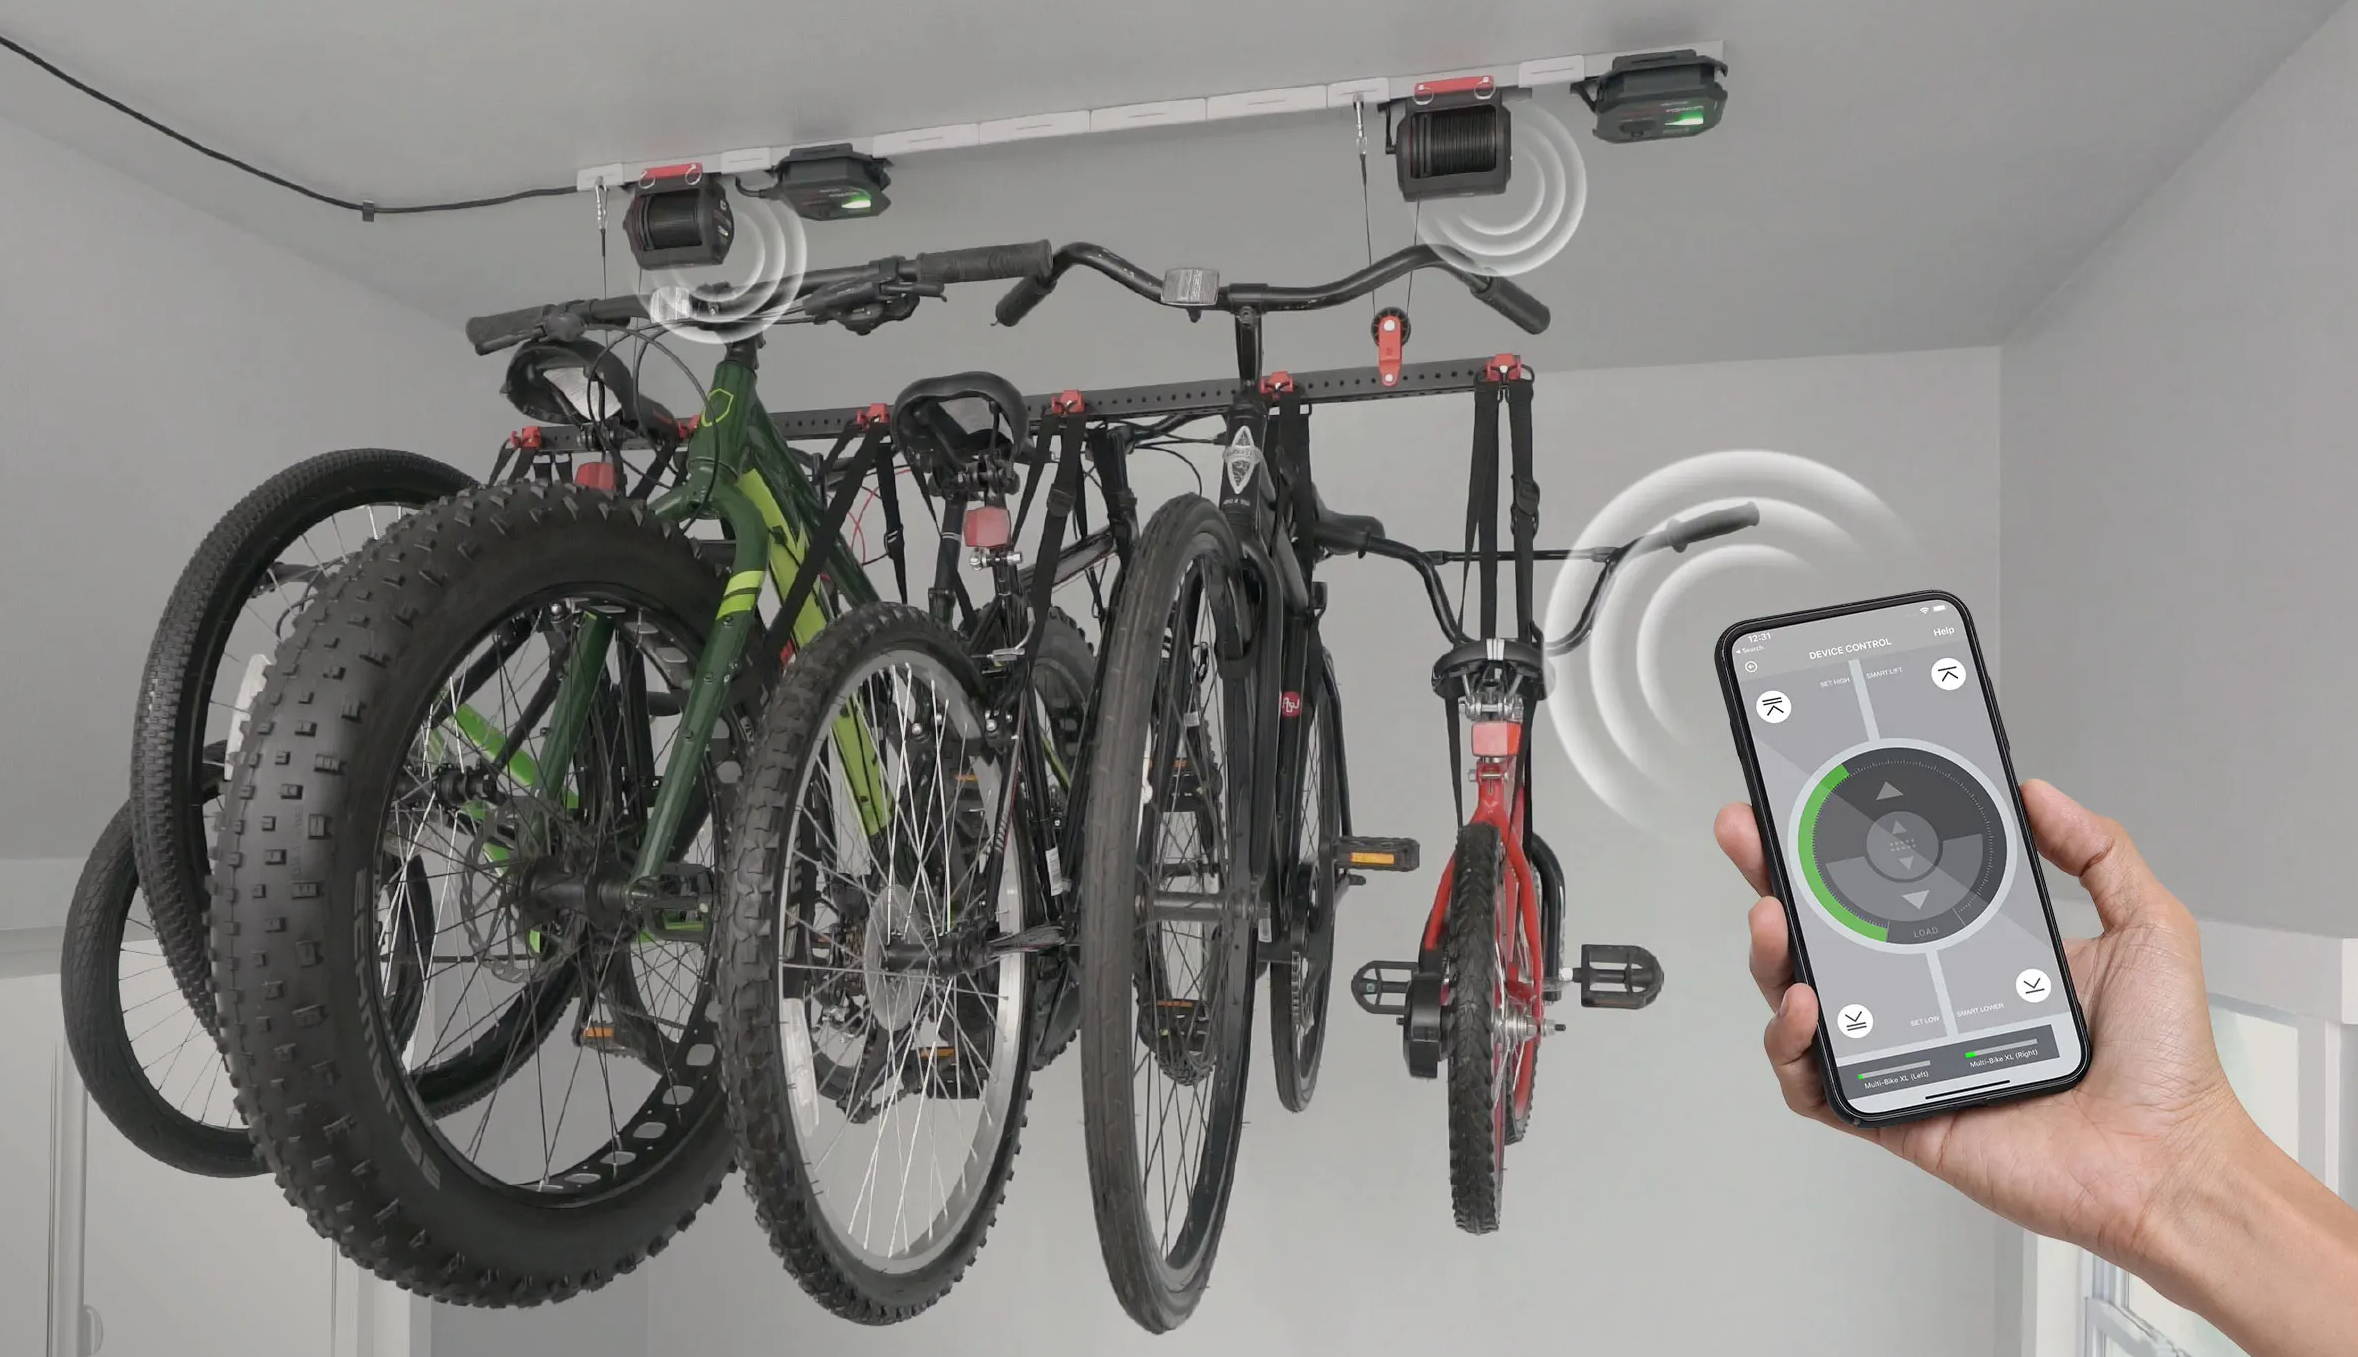 Multi-Bike XL being used by phone